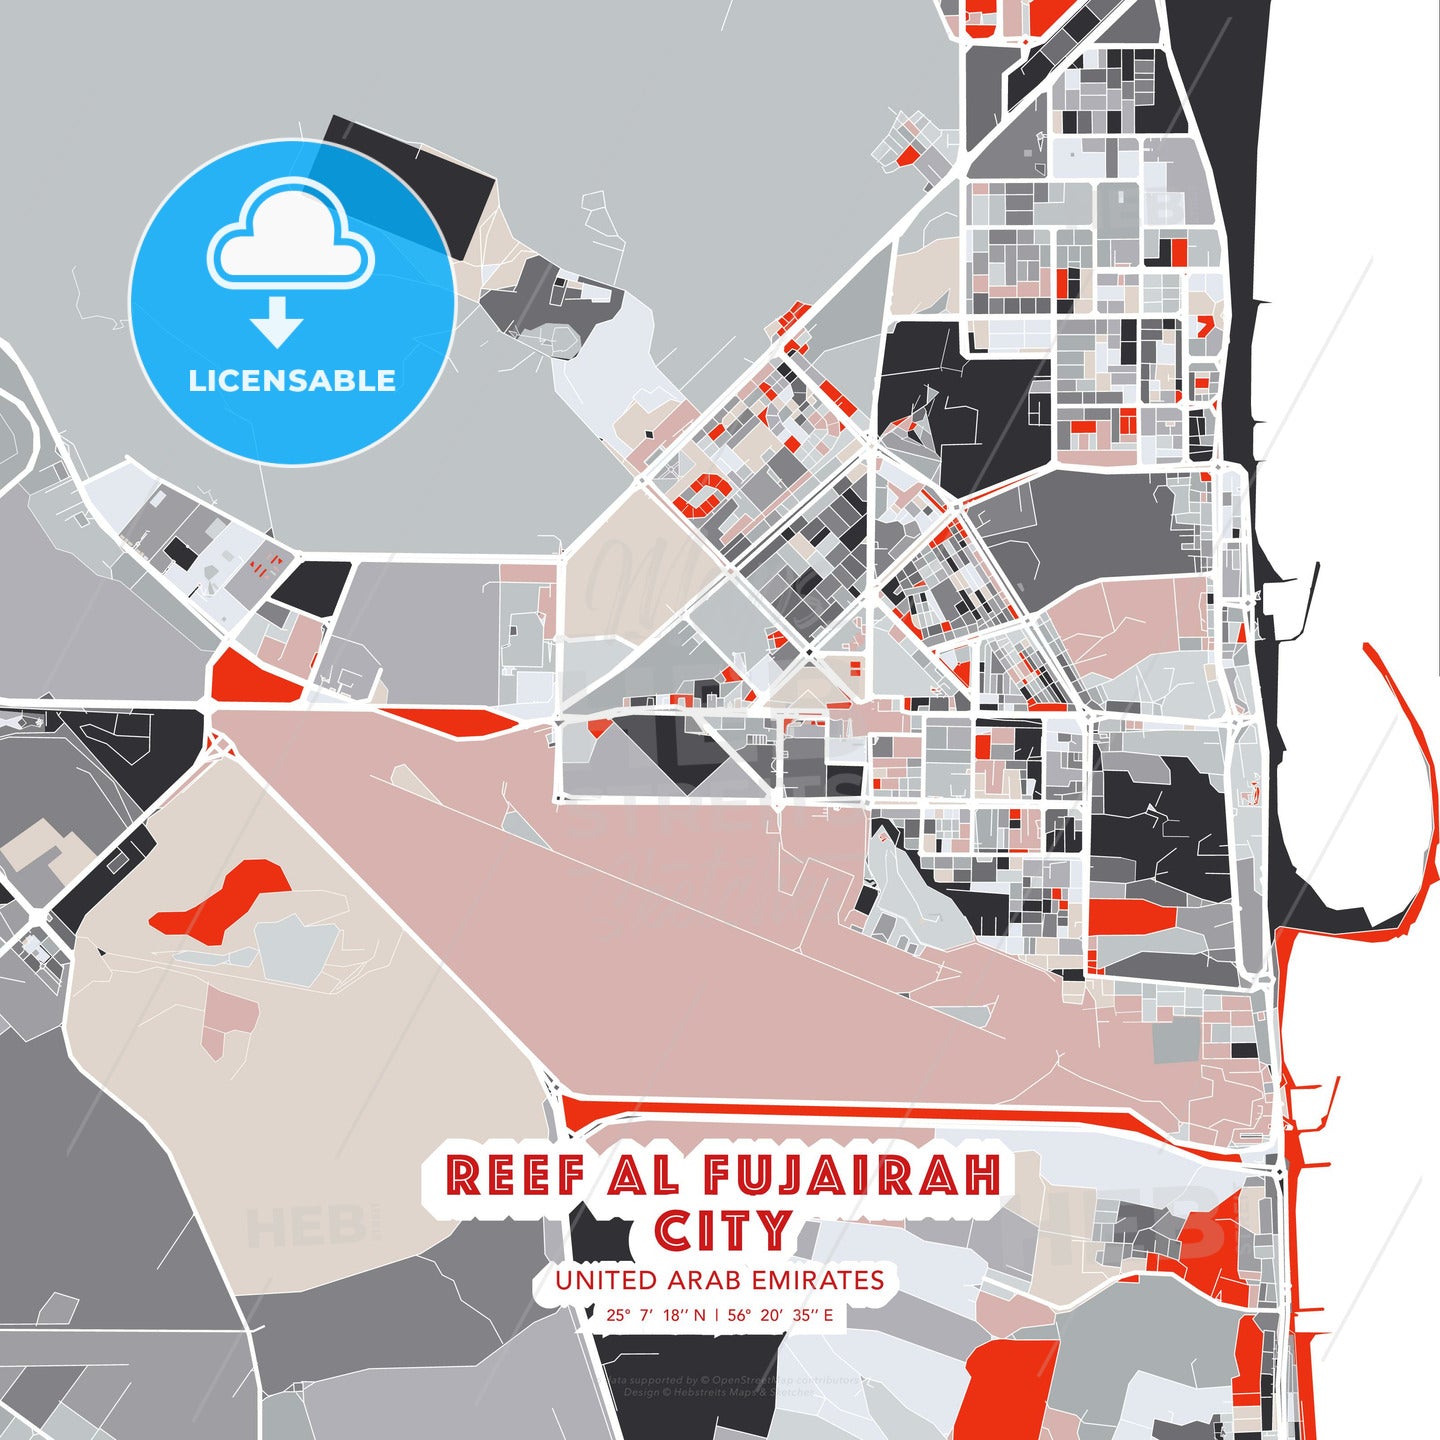 Reef Al Fujairah City, United Arab Emirates, modern map - HEBSTREITS Sketches